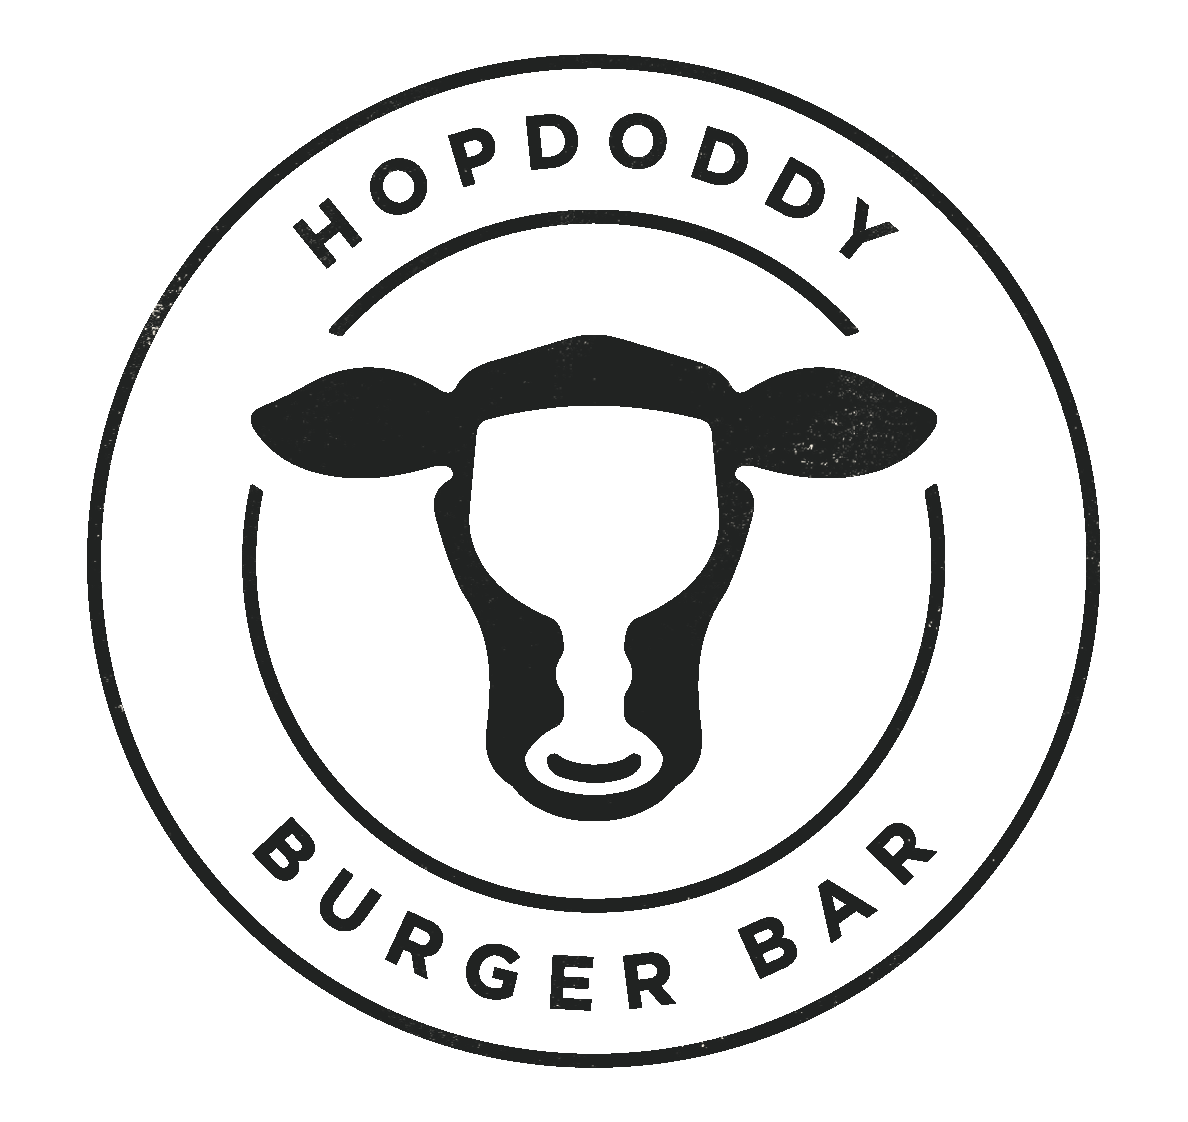 Hopdoddy Logo - Arizona Beer Week 2019 | Hopdoddy Burger Bar – Beer and Burger ...